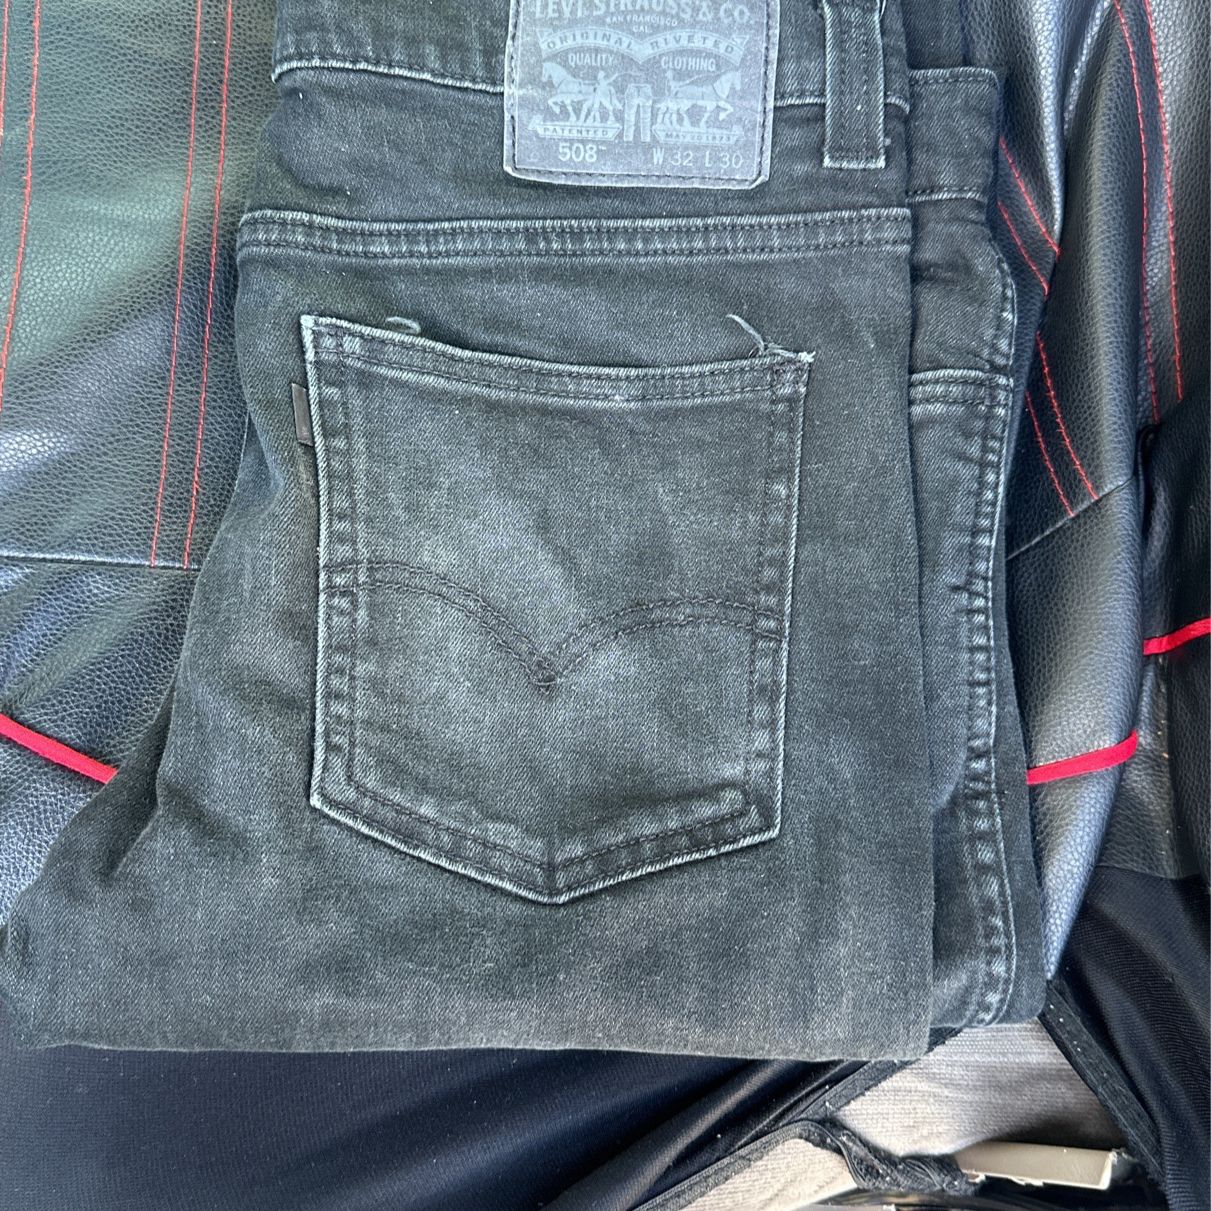 Levi’s 508 Black jeans